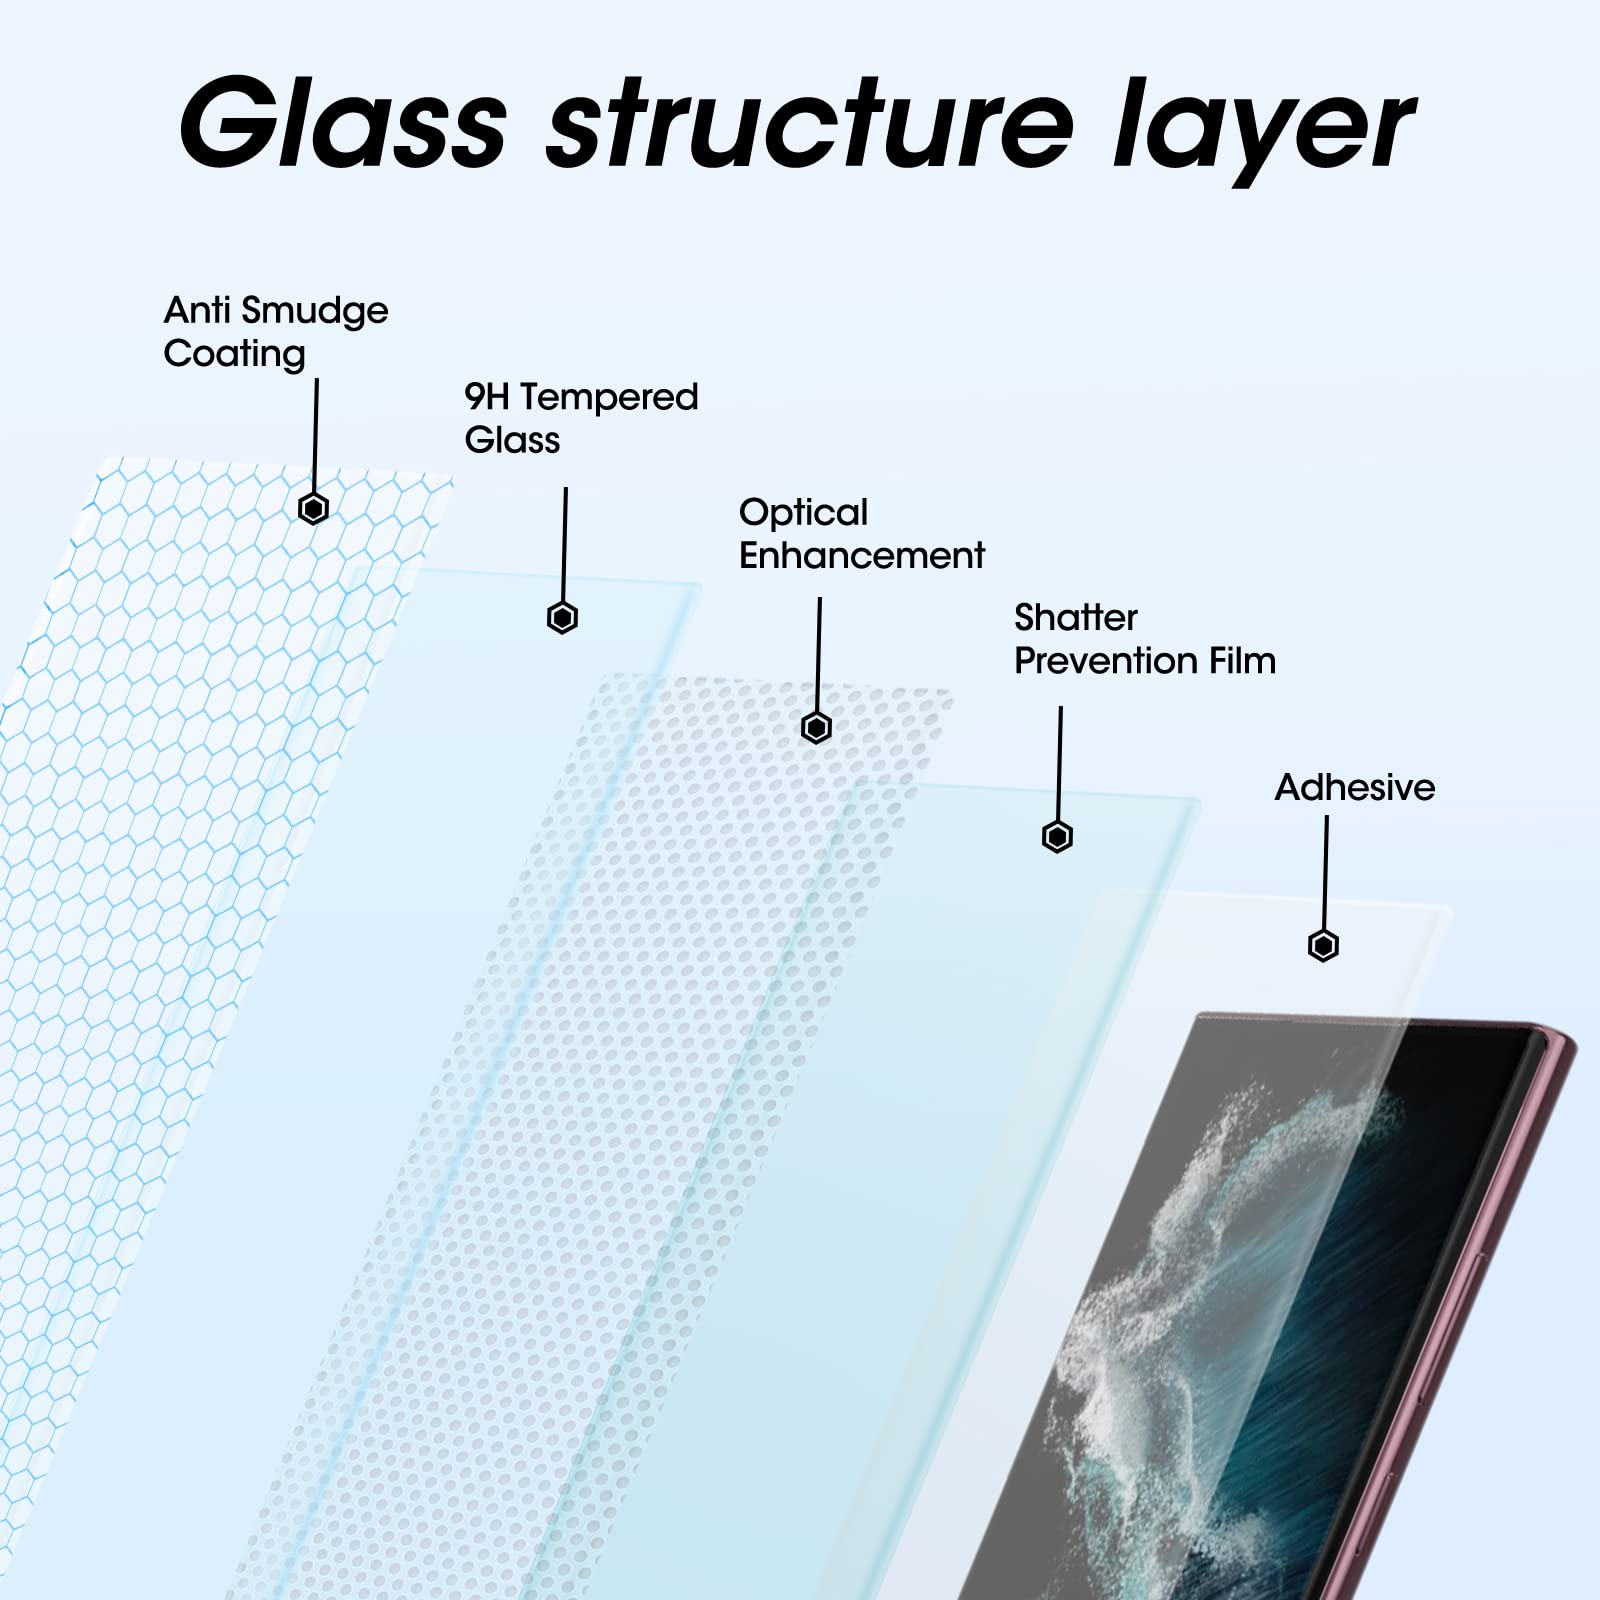 3 Pack Ultra Glass Screen Protector for Samsung Galaxy S22 Ultra Tempered Glass Shield Full HD 3D Curved Edge 100% Ultrasonic Fingerprint Unlocking Protector Easy Install Kit for Galaxy S22 Ultra 5G